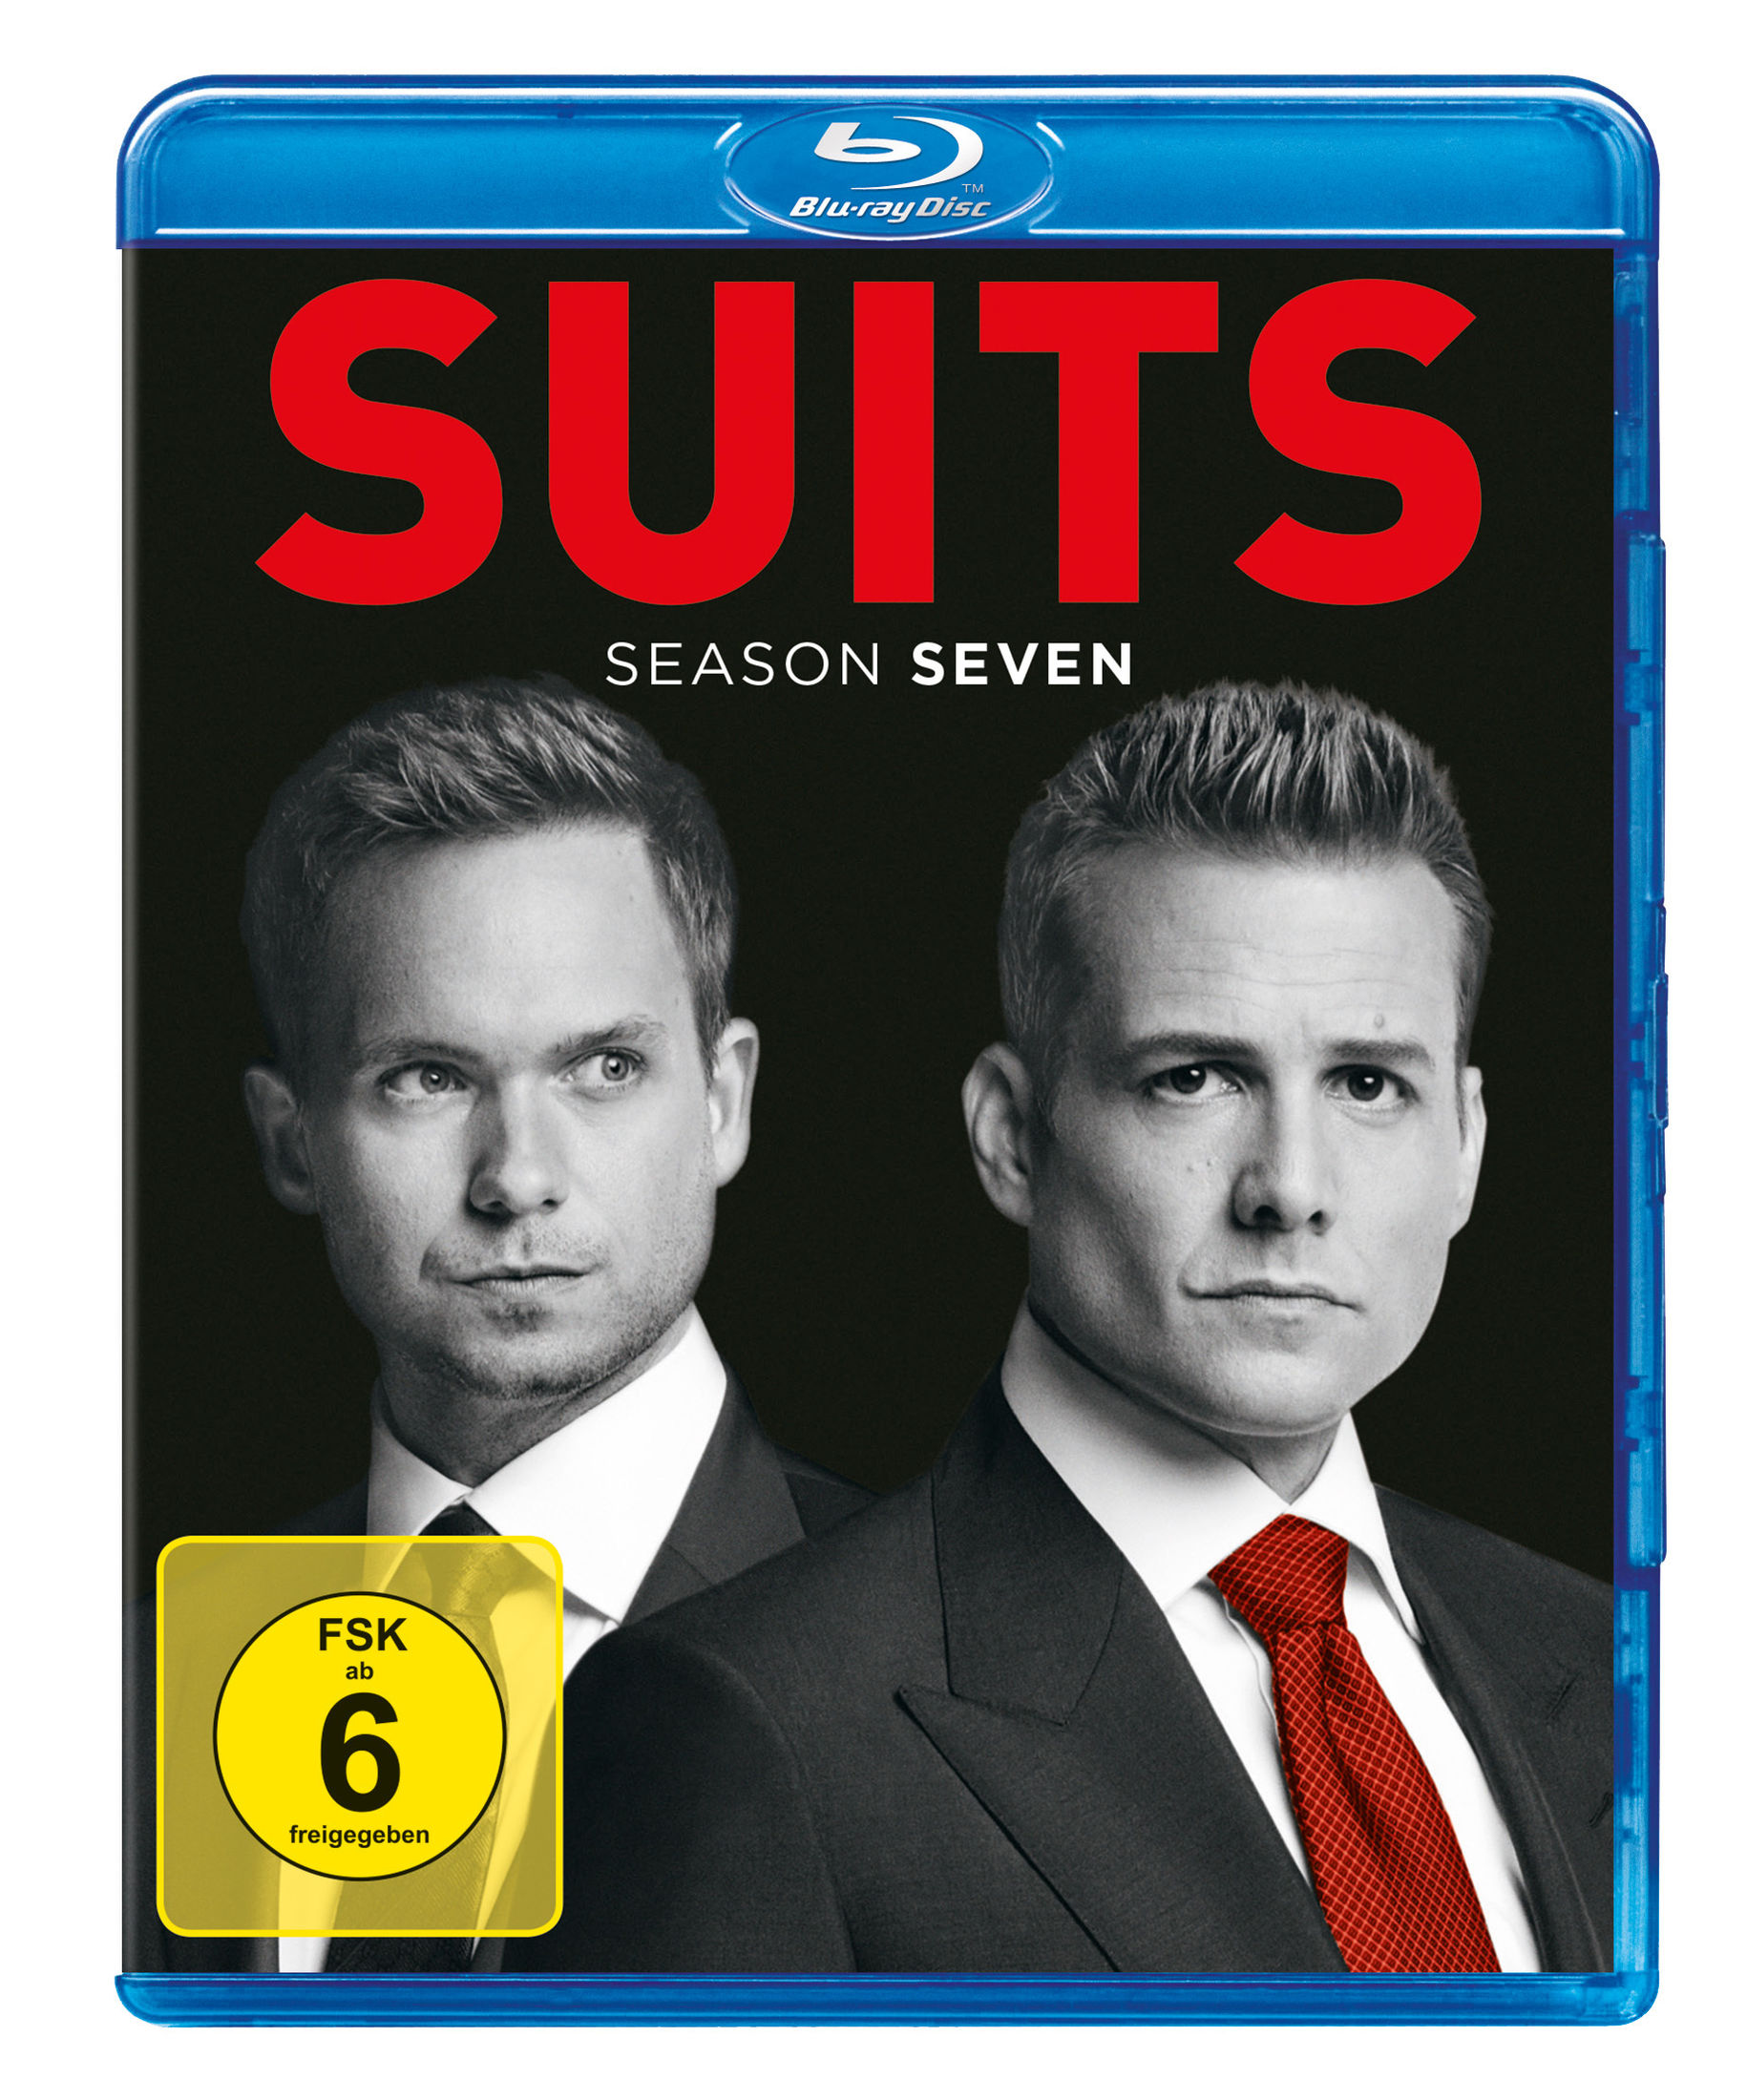 Suits - Season 7 Blu-ray jetzt im Weltbild.de Shop bestellen